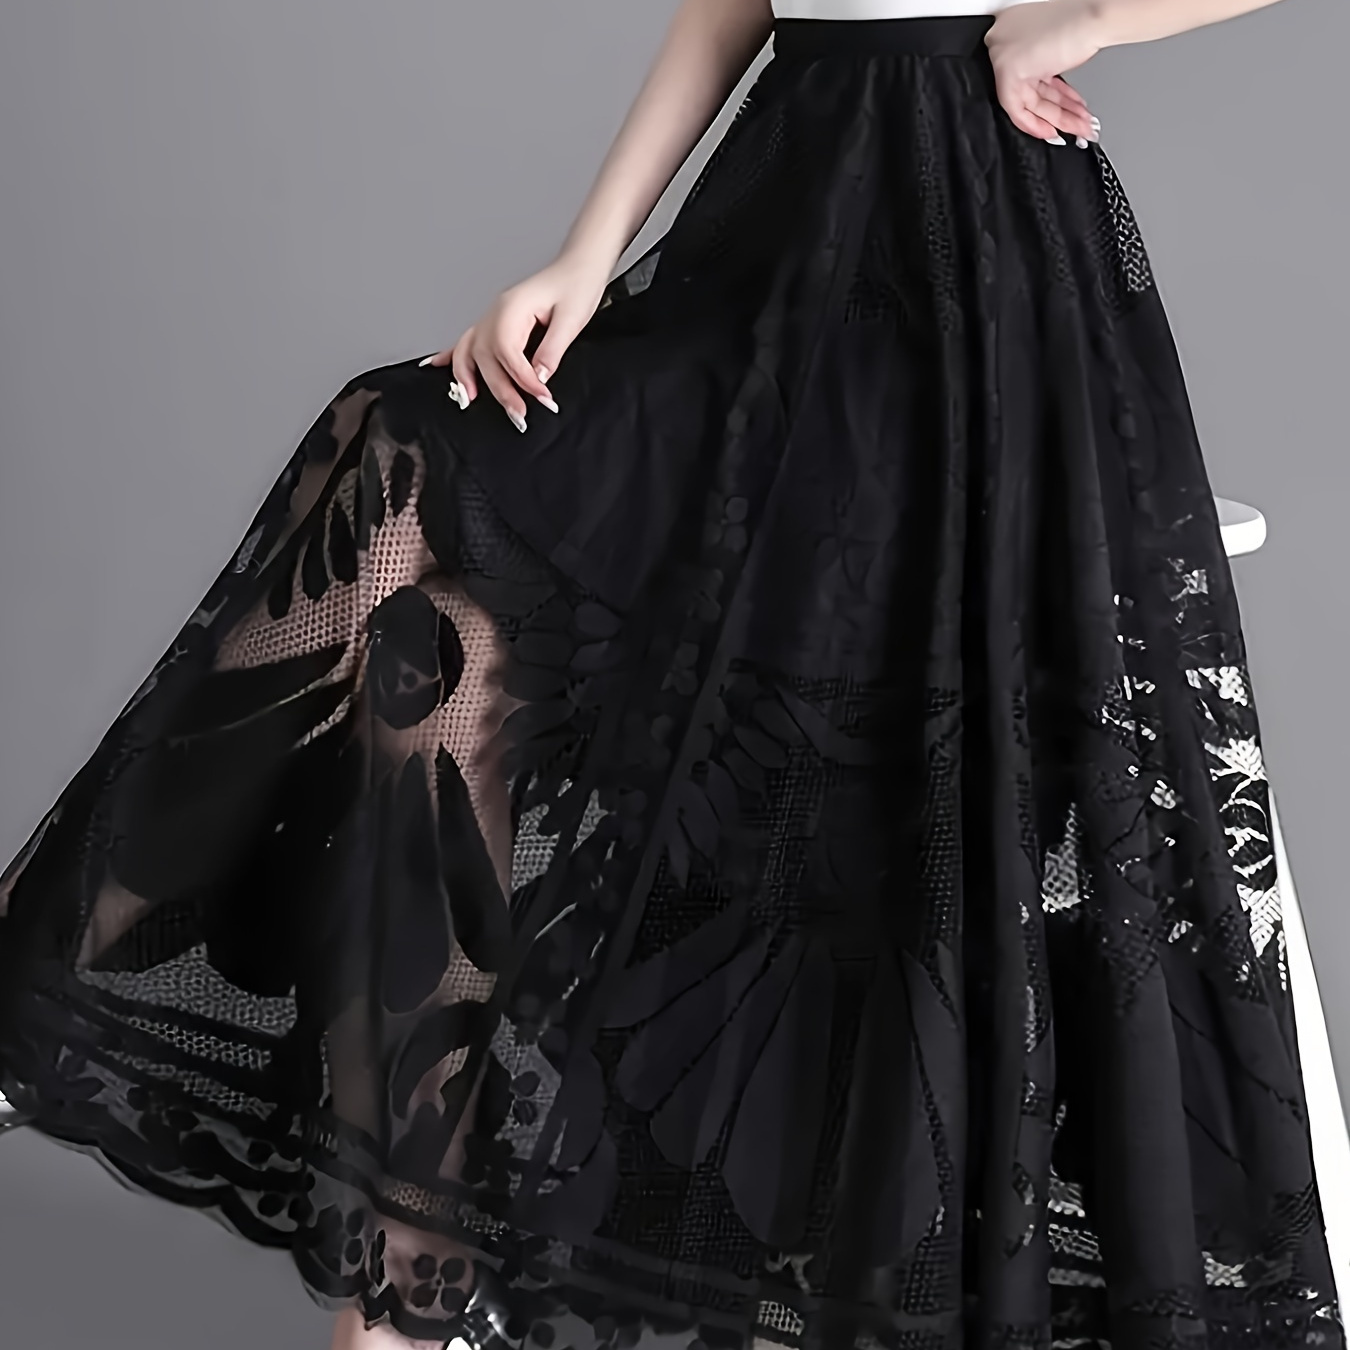 

Scallop Trim High Waist Lace Skirt, Elegant Ankle Length Skirt For Spring & Summer, Women's Clothing